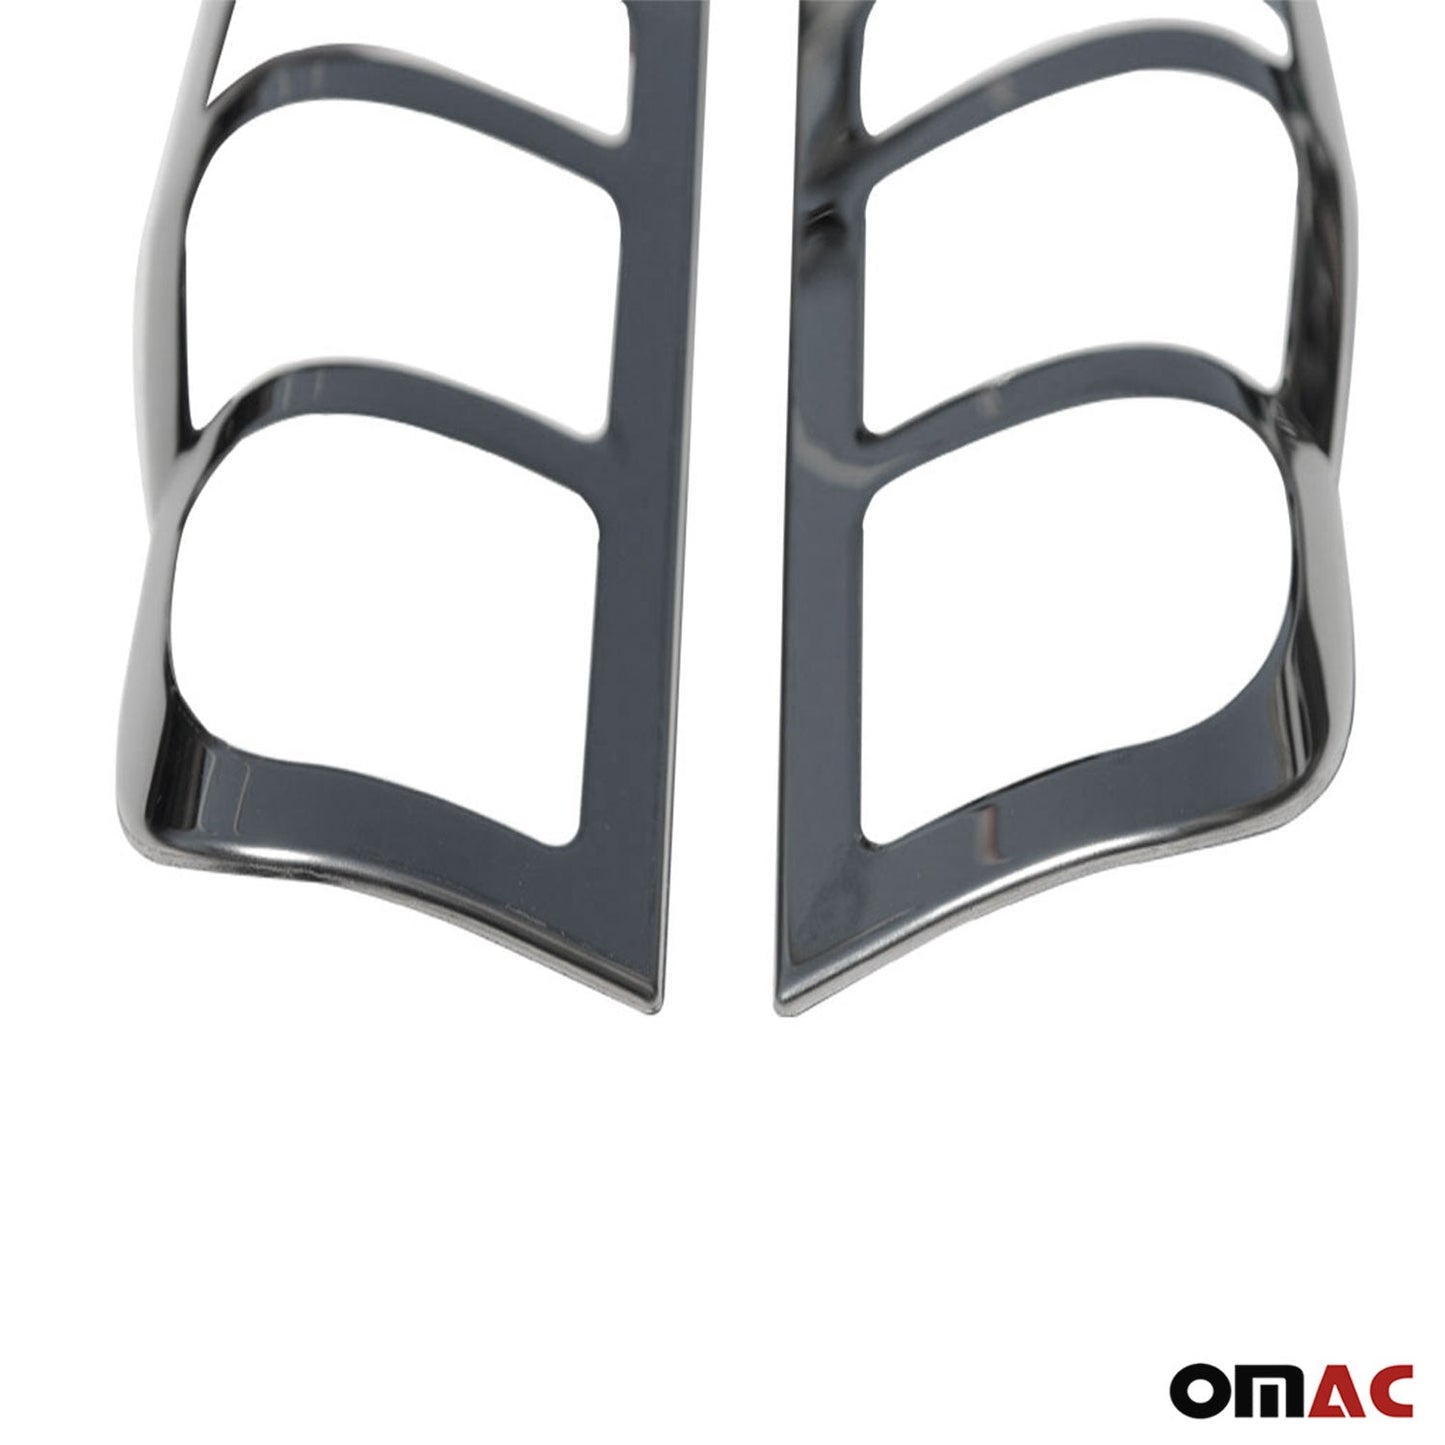 OMAC Trunk Tail Light Trim Frame for Ford Transit 2007-2014 Steel Dark 2 Pcs 2621101B